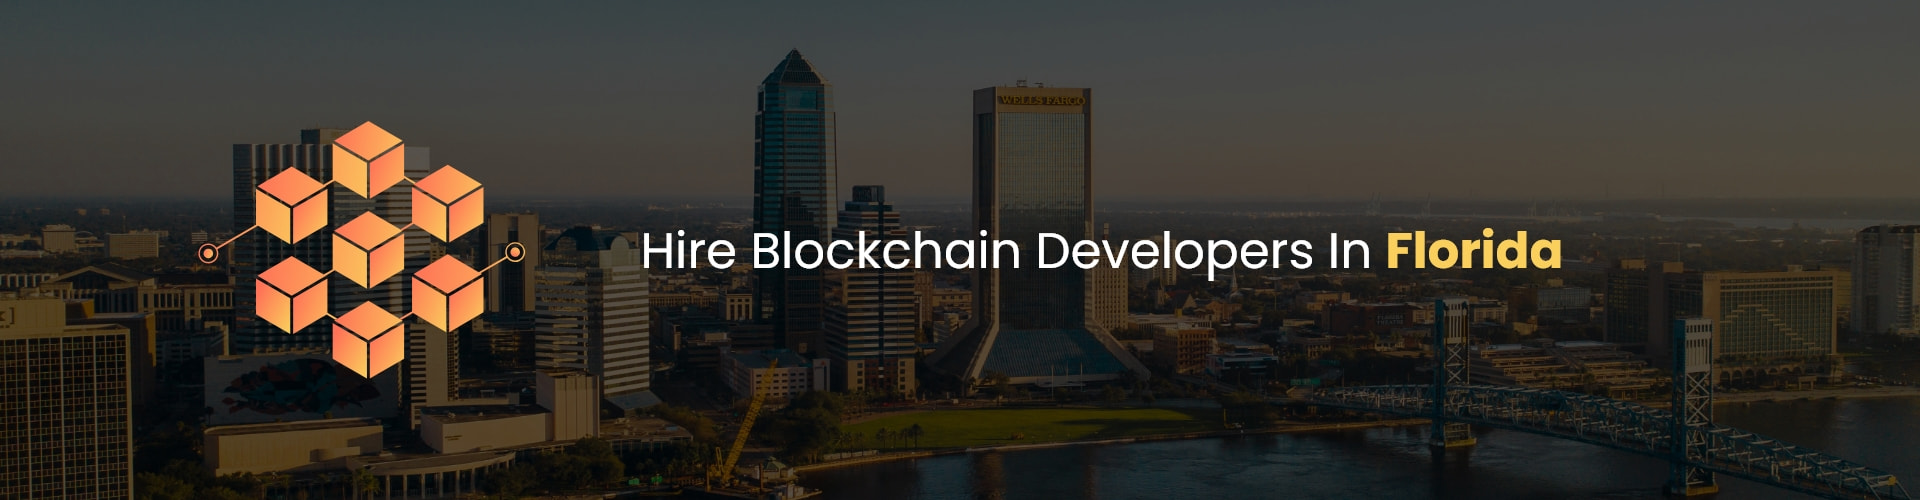 hire blockchain developers in florida